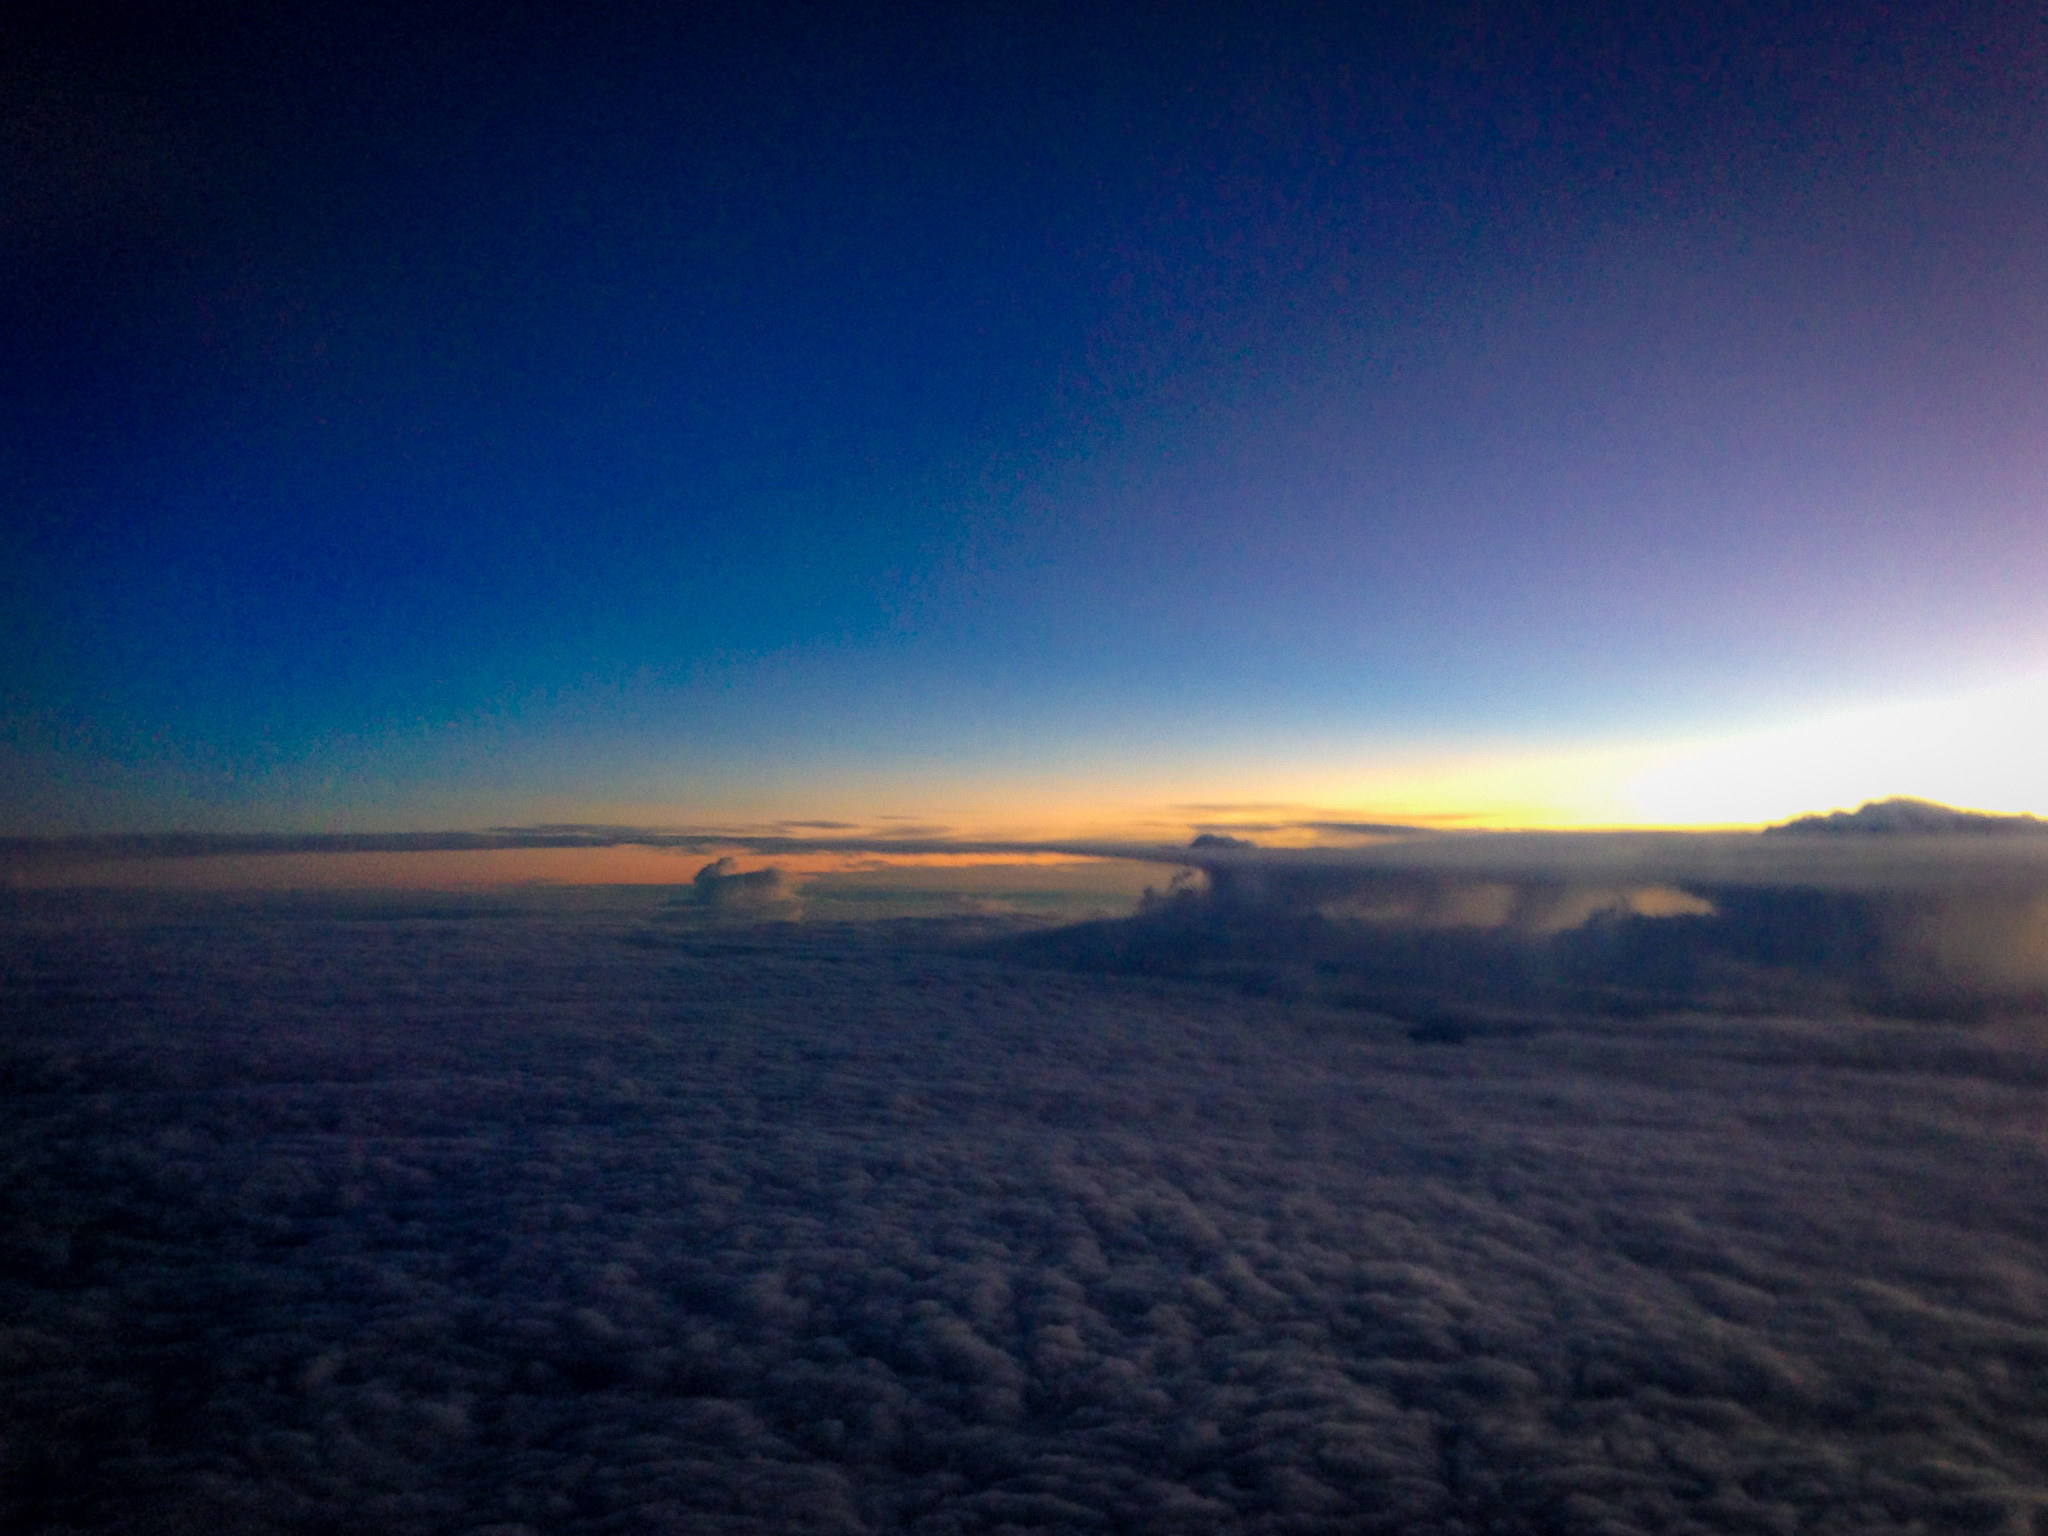 Sunrise on our flight